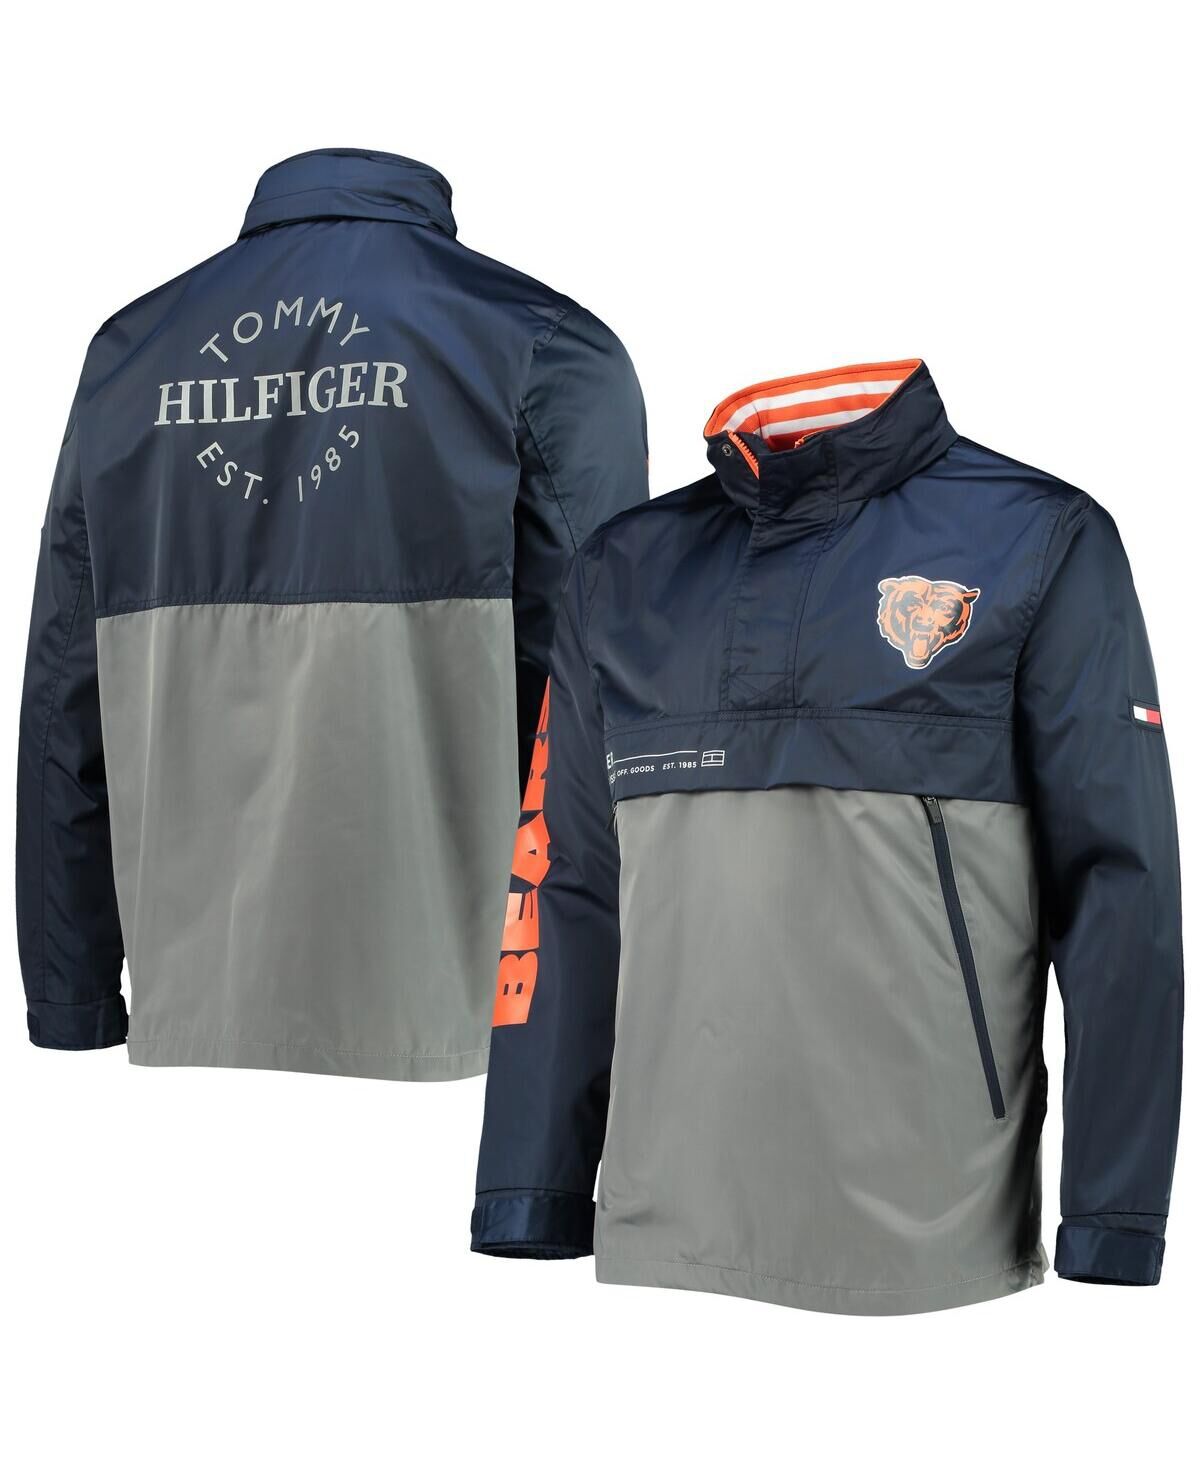 Tommy Hilfiger Men's Navy, Gray Chicago Bears Anorak Hoodie Quarter-Zip Jacket - Navy, Gray